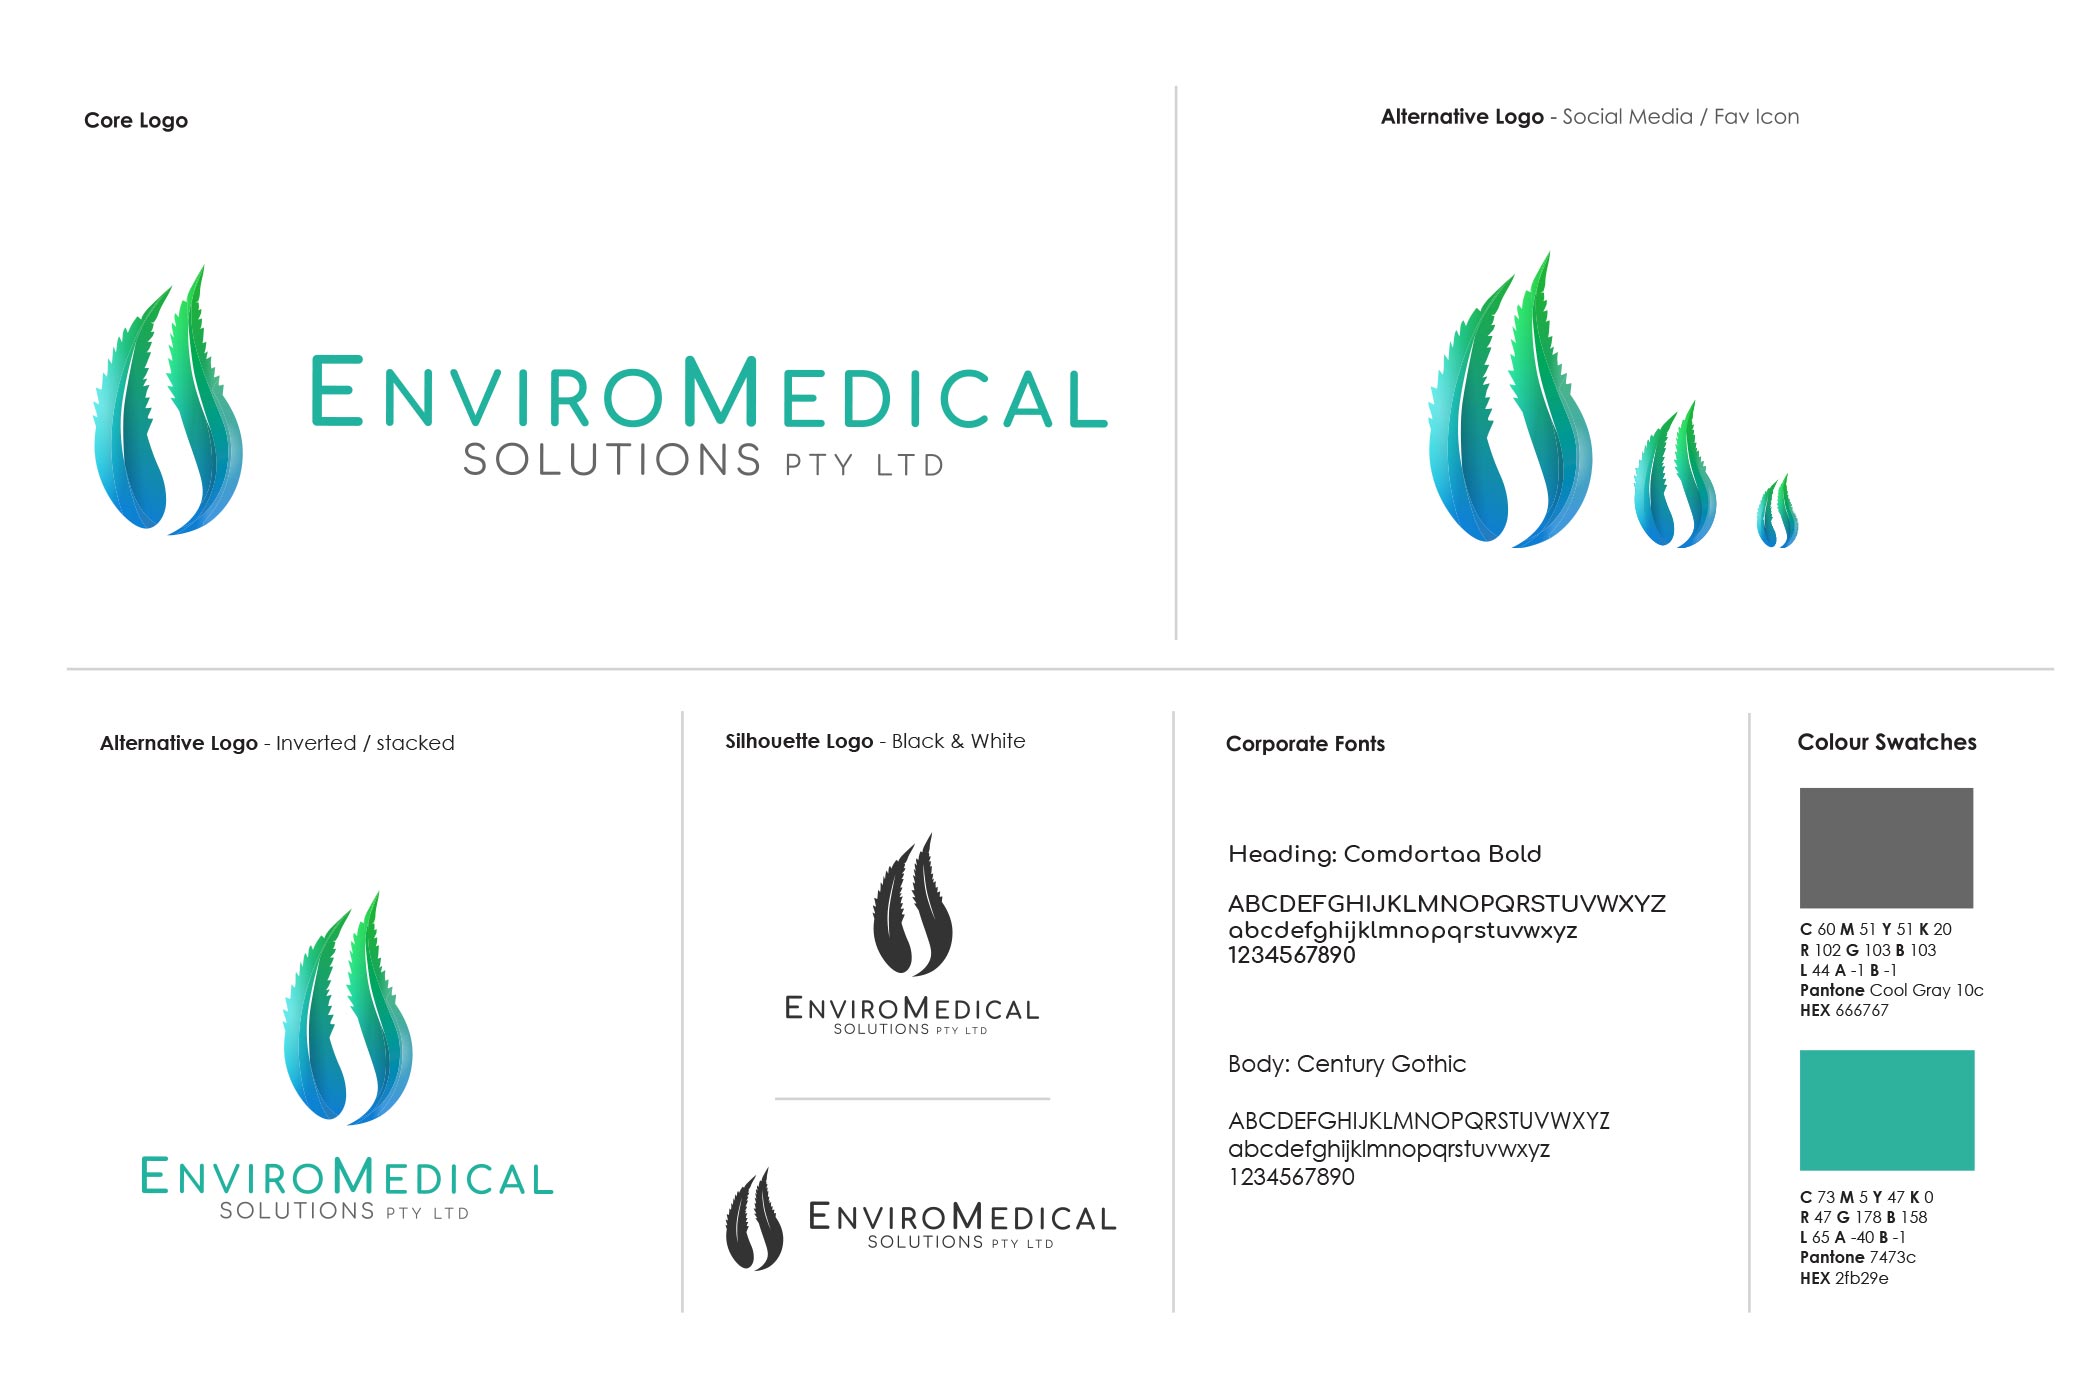 Enviro Medical Solutions Pty Ltd logo guidelines